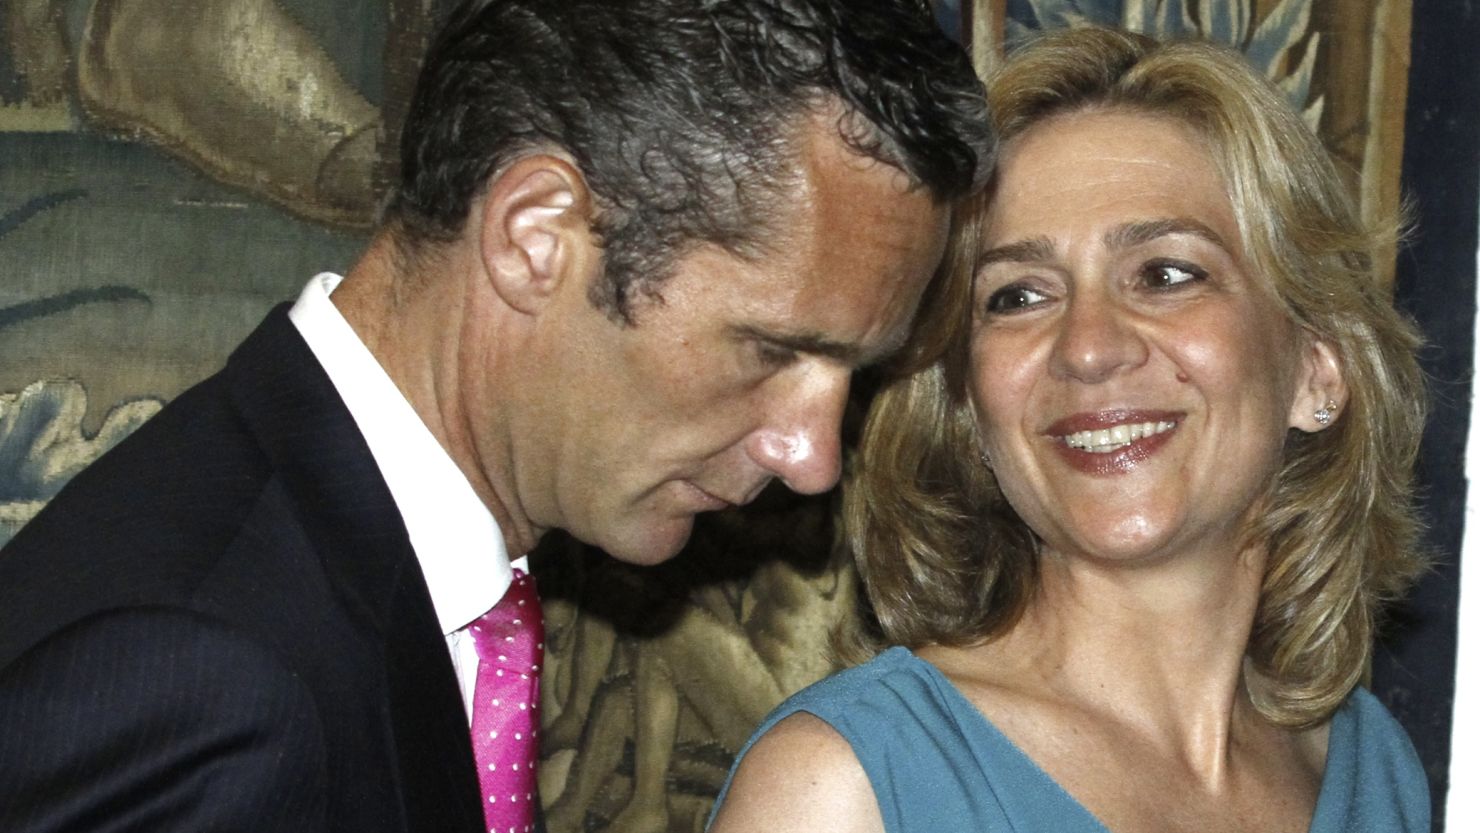 Princess Cristina and her husband, Inaki Urdangarin, are shown in Palma de Mallorca, Spain, in 2011.